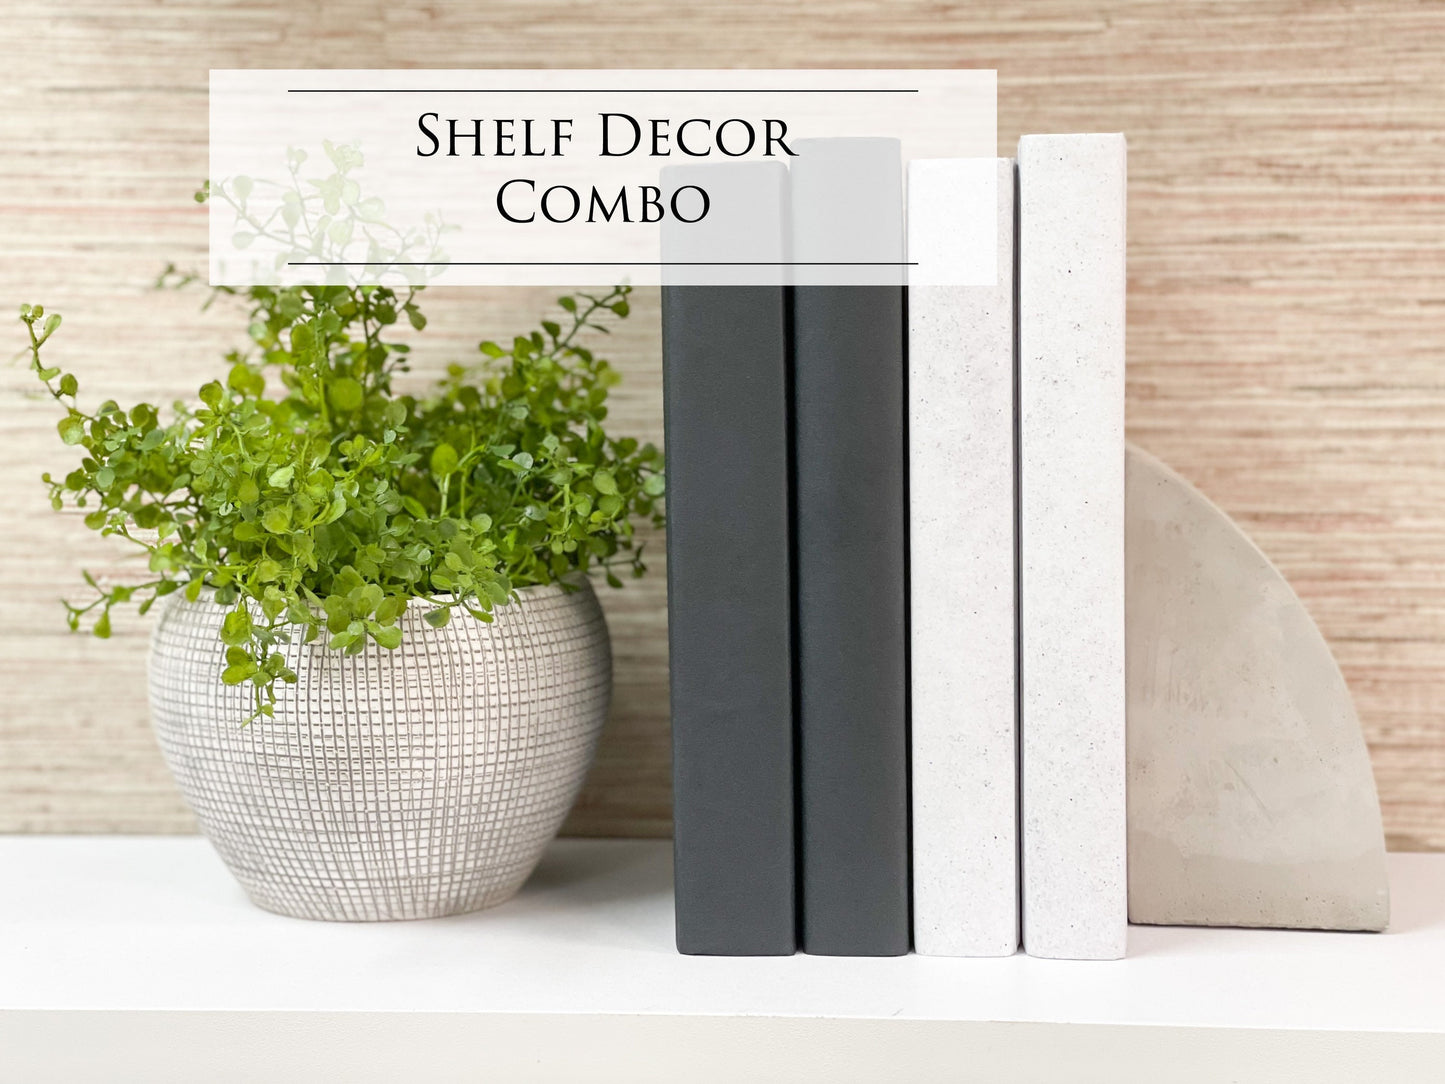 Decorative Books and Shelf Decor Combo Set